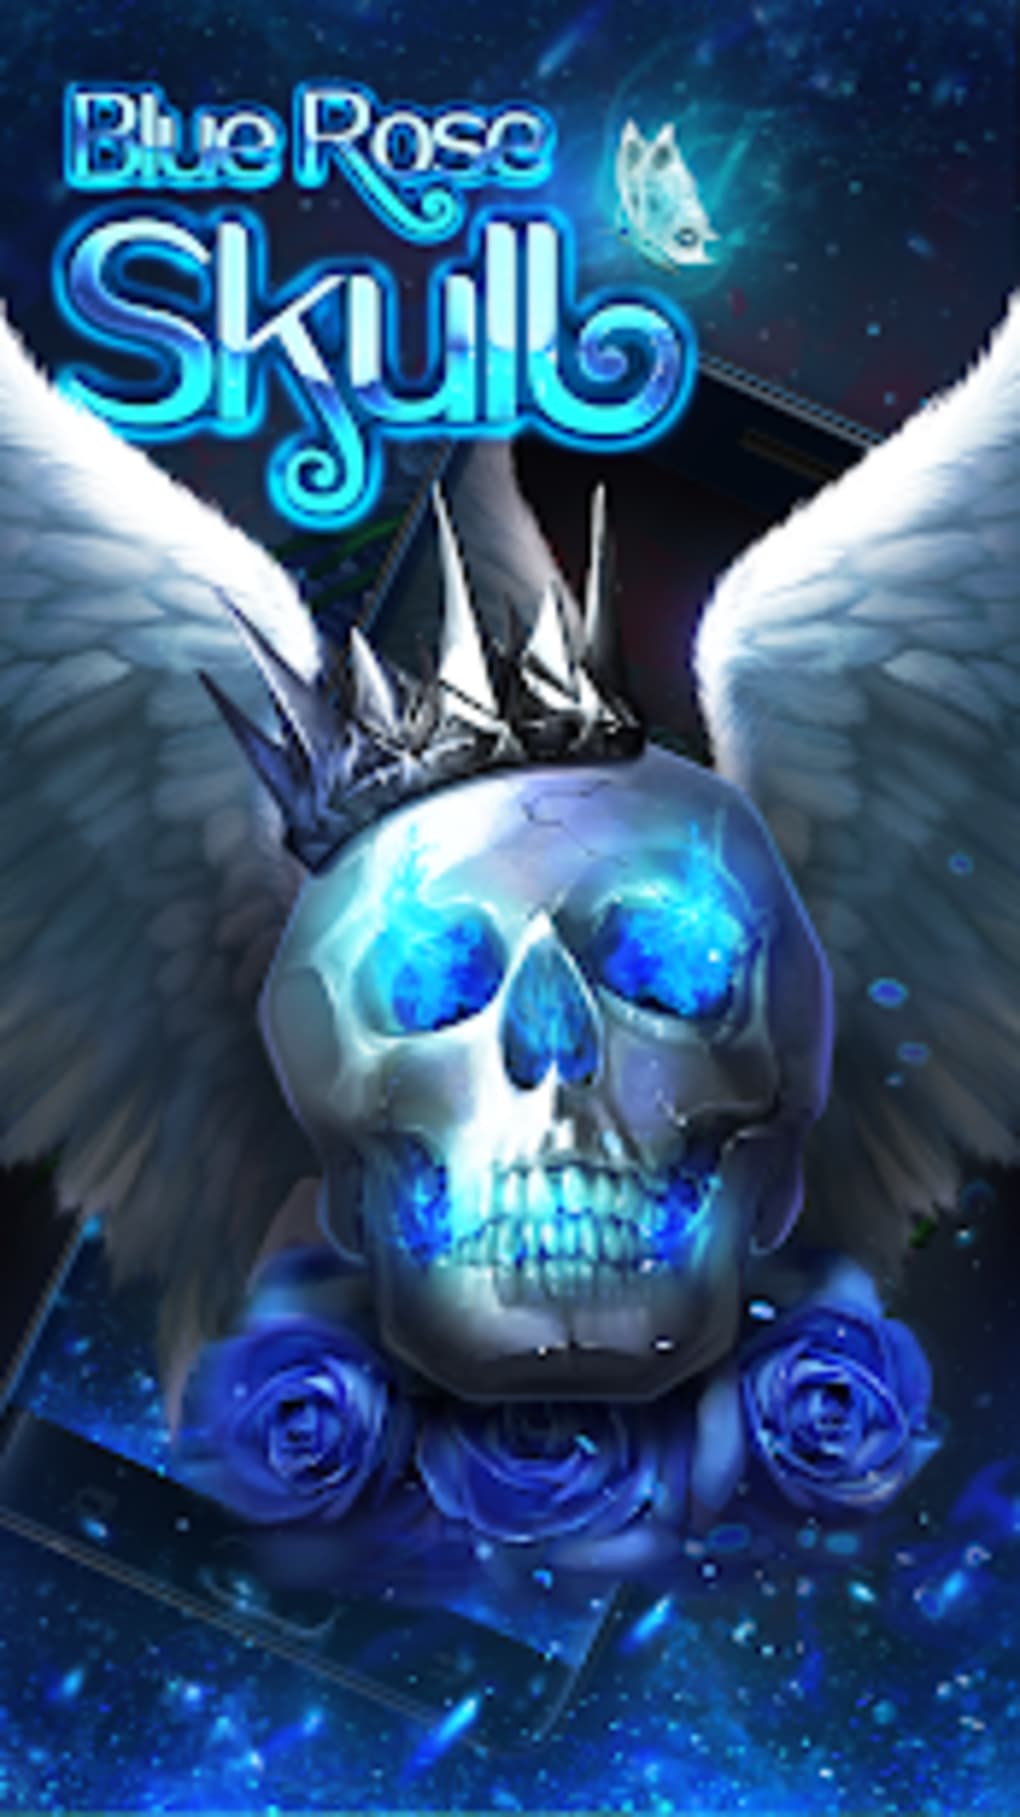 Blue Rose Skull Live Wallpaper APK for Android